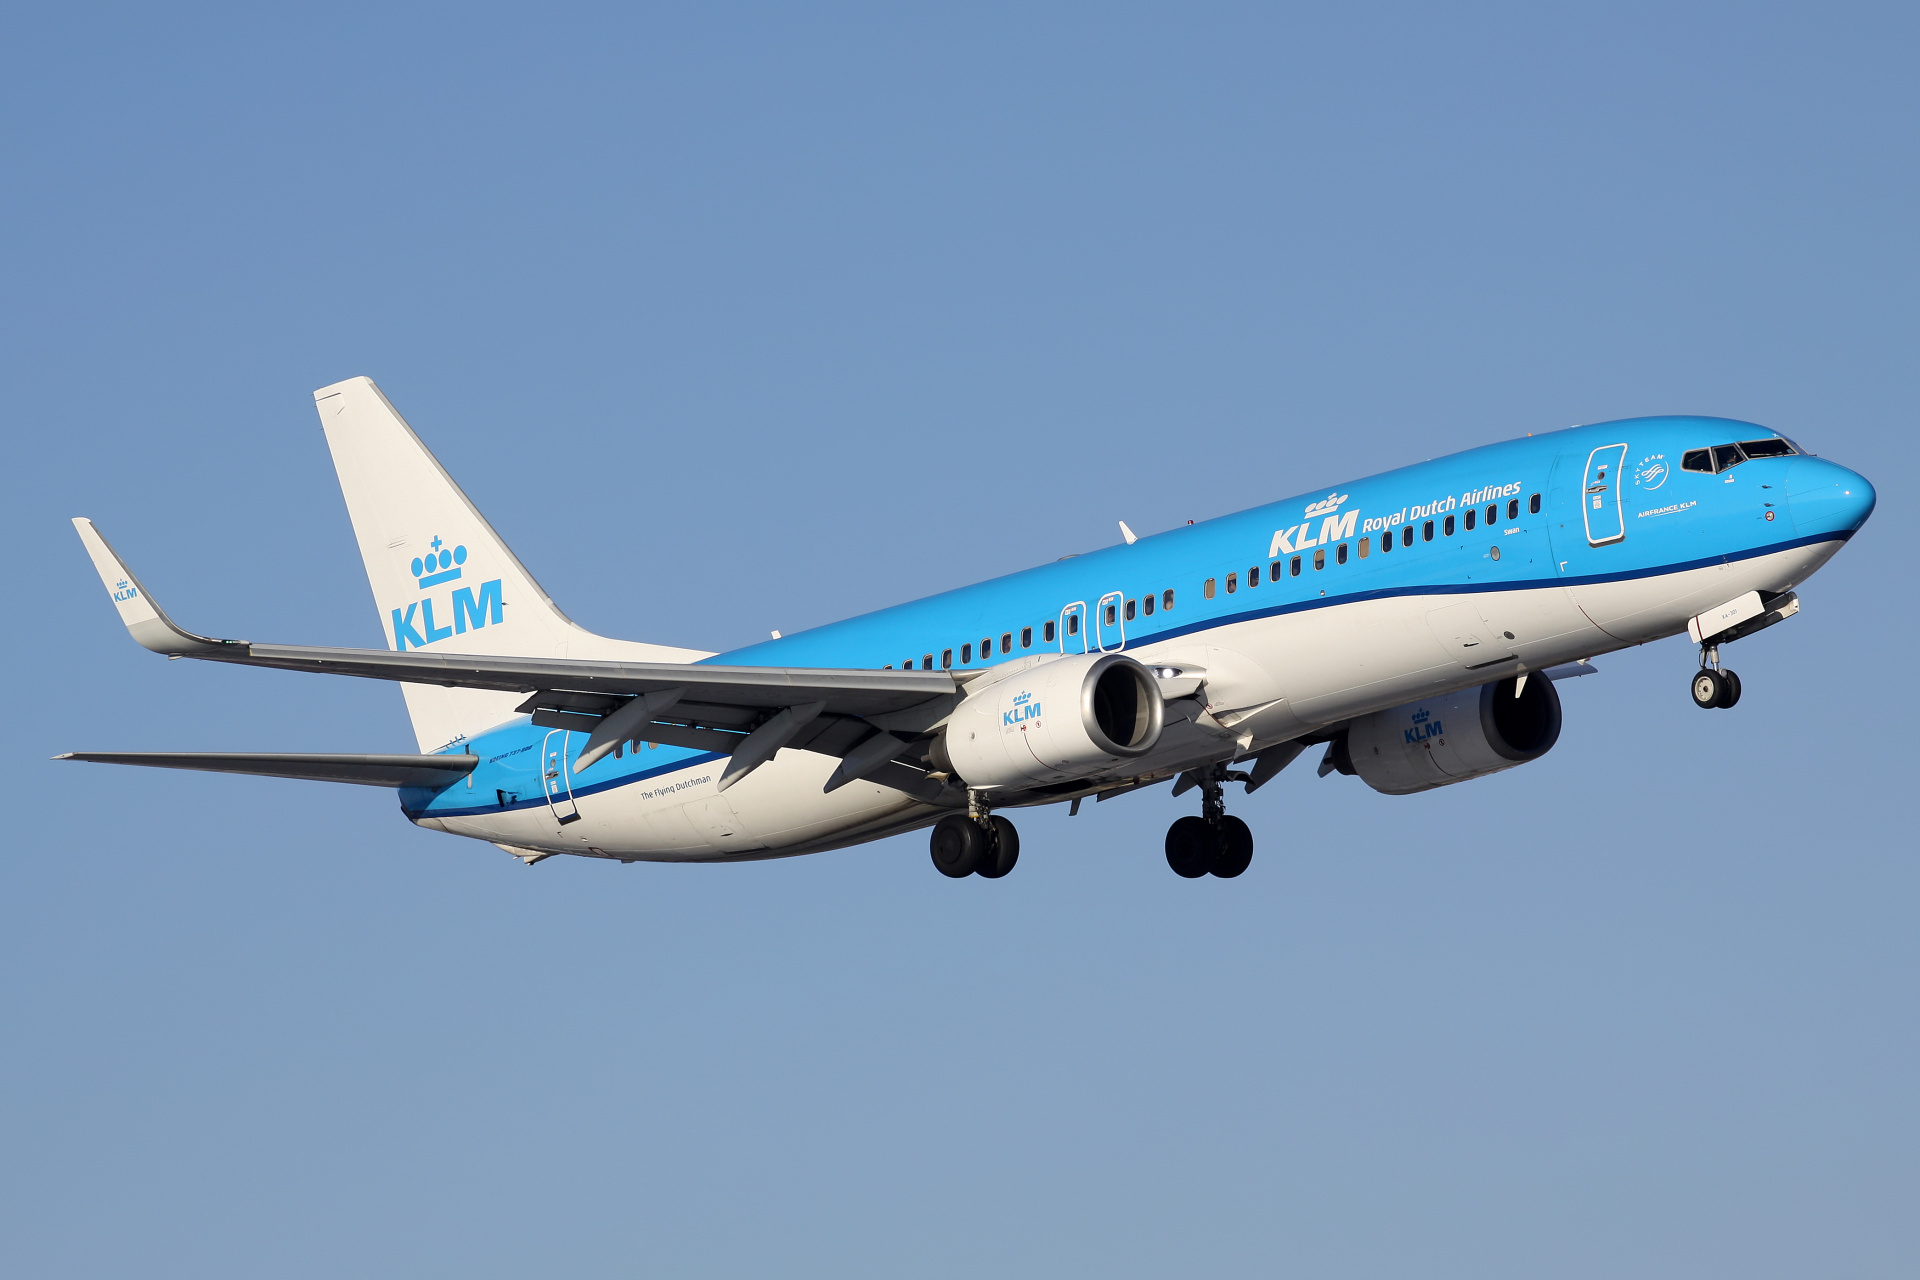 PH-BXA (Aircraft » EPWA Spotting » Boeing 737-800 » KLM Royal Dutch Airlines)